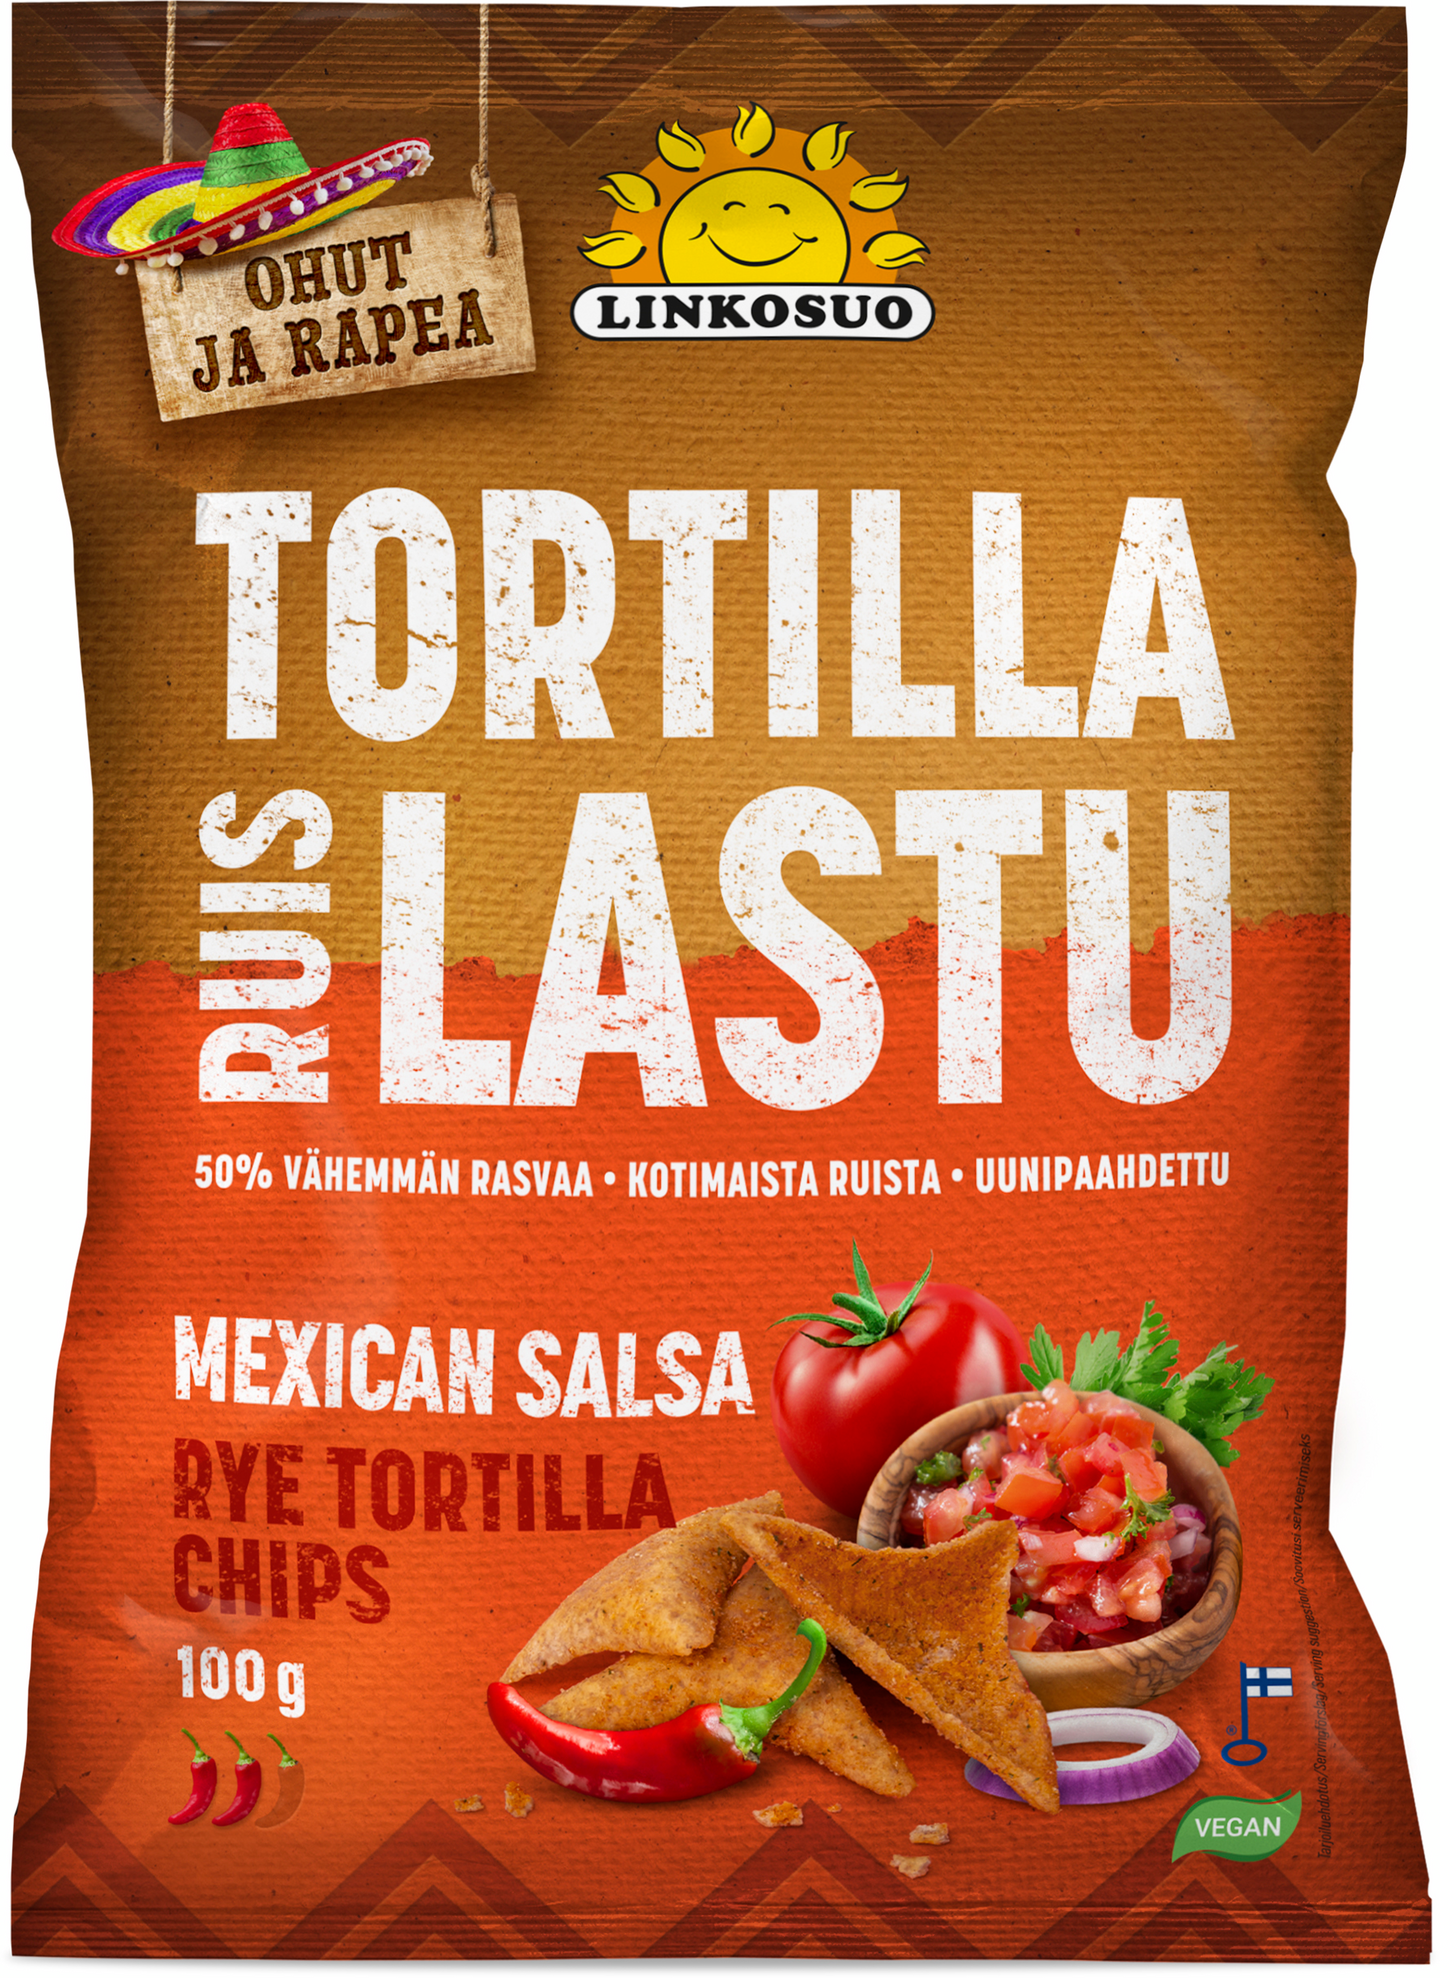 Linkosuo Ruistortillalastu 100g Mexican salsa